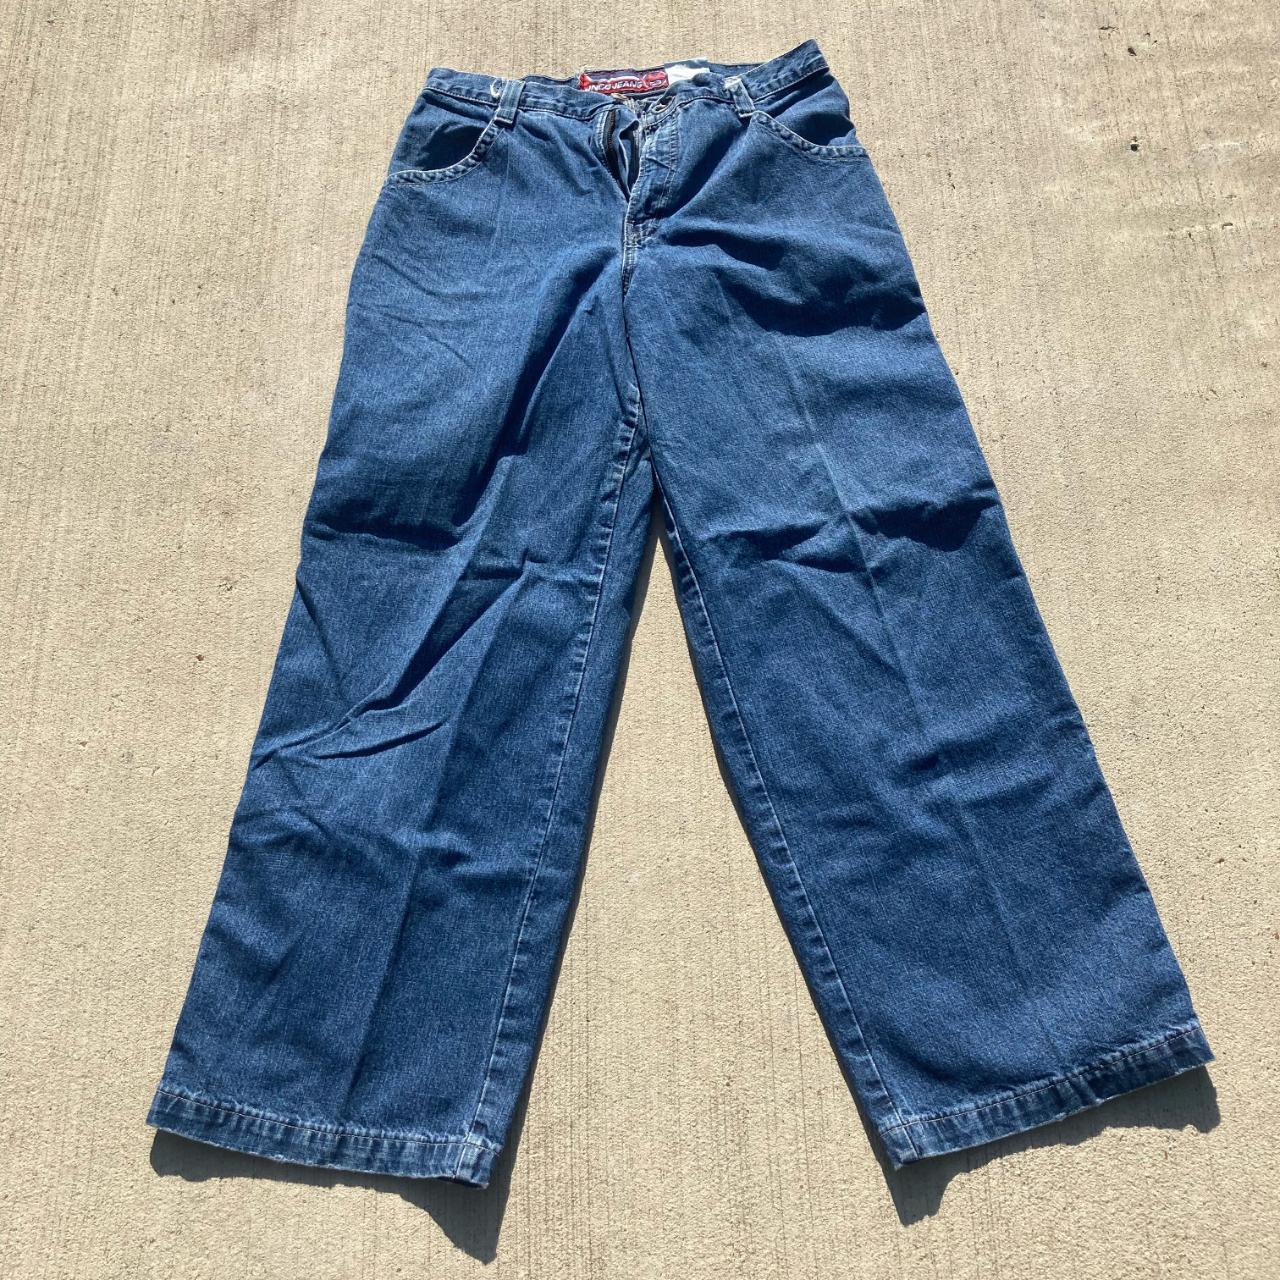 JNCO Men's Jeans Crown Embroidery Sz: 33x32 - Depop